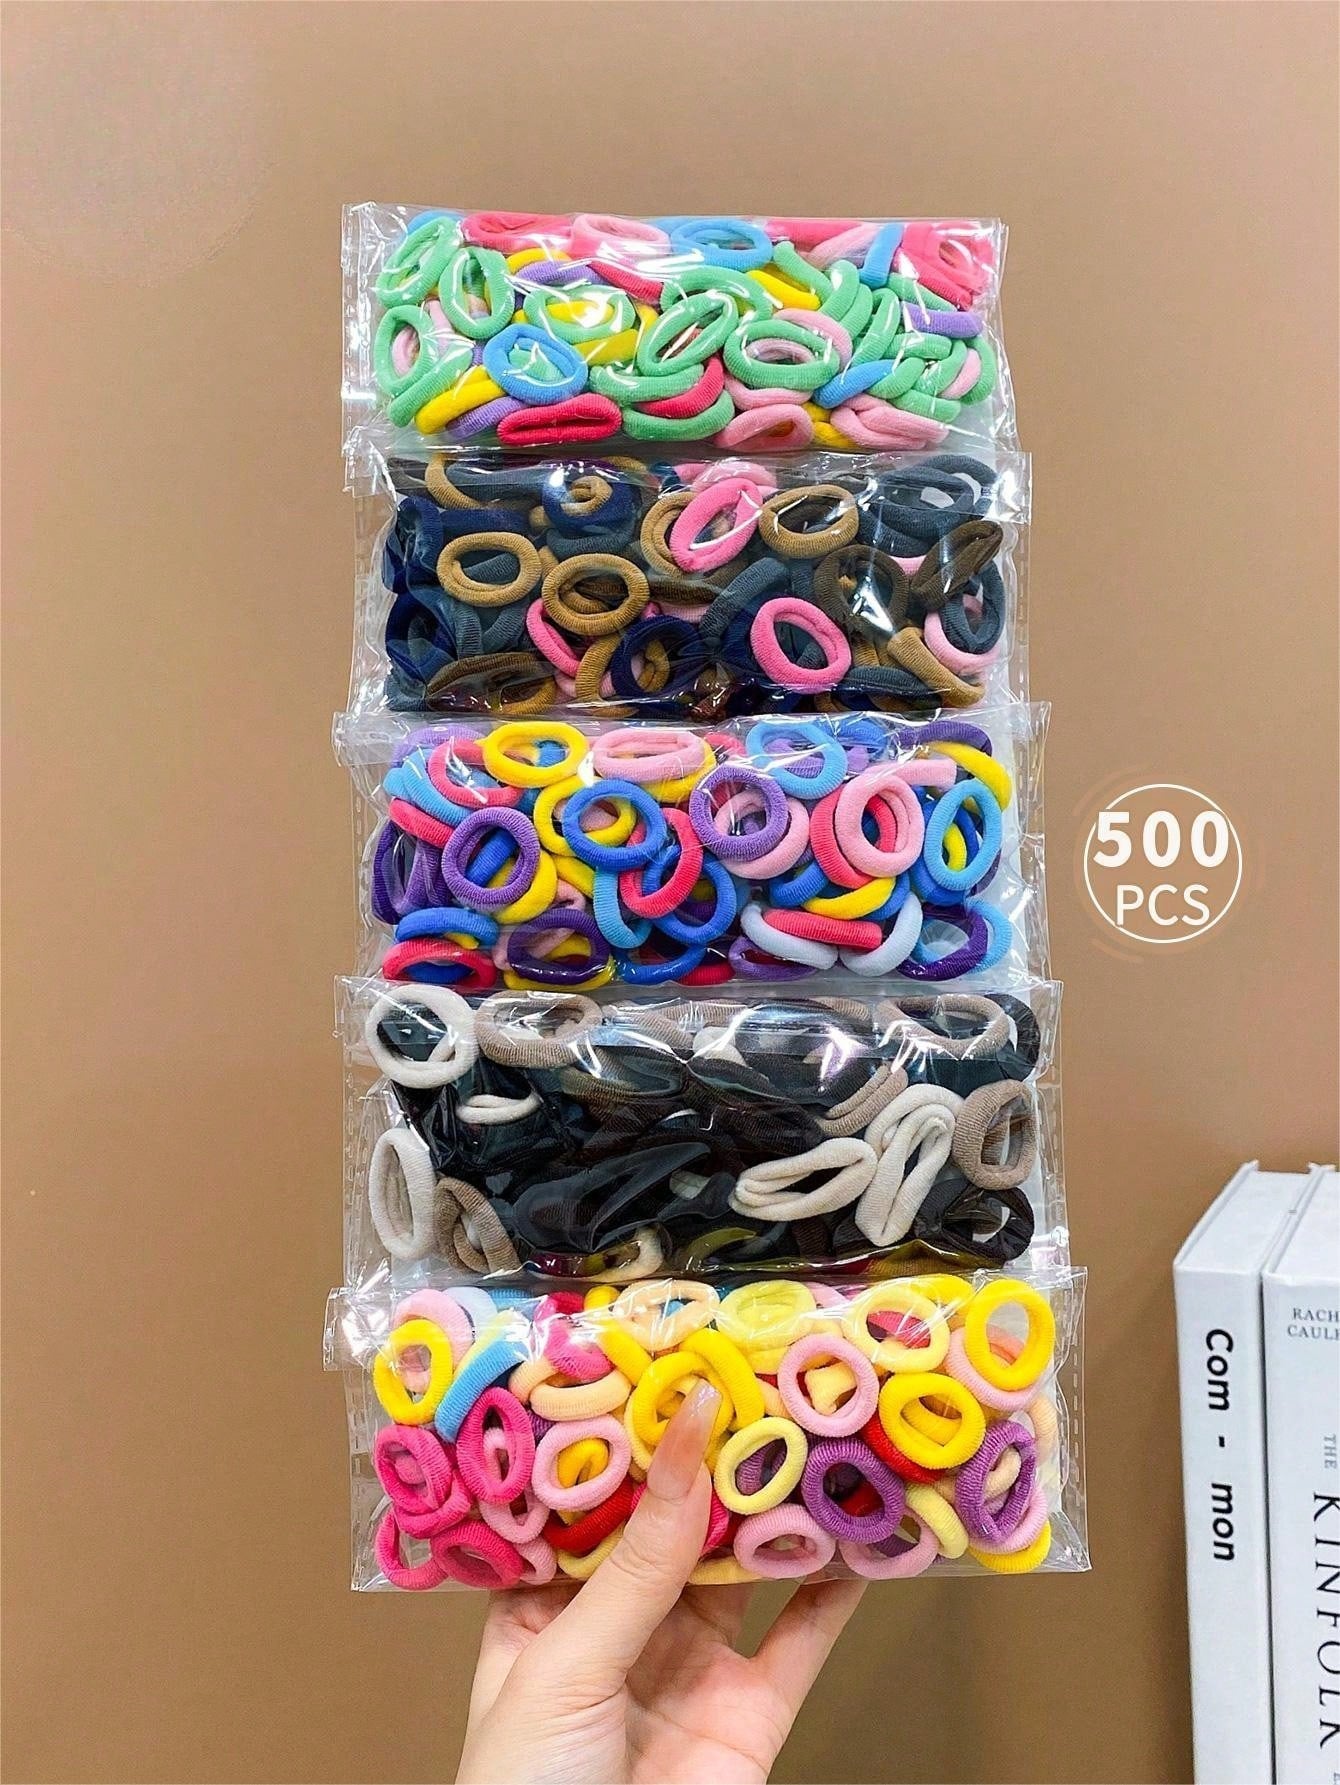 5 Packs (500pcs) Girls' Colorful Elastic Hair Bands With Towel Ring Design